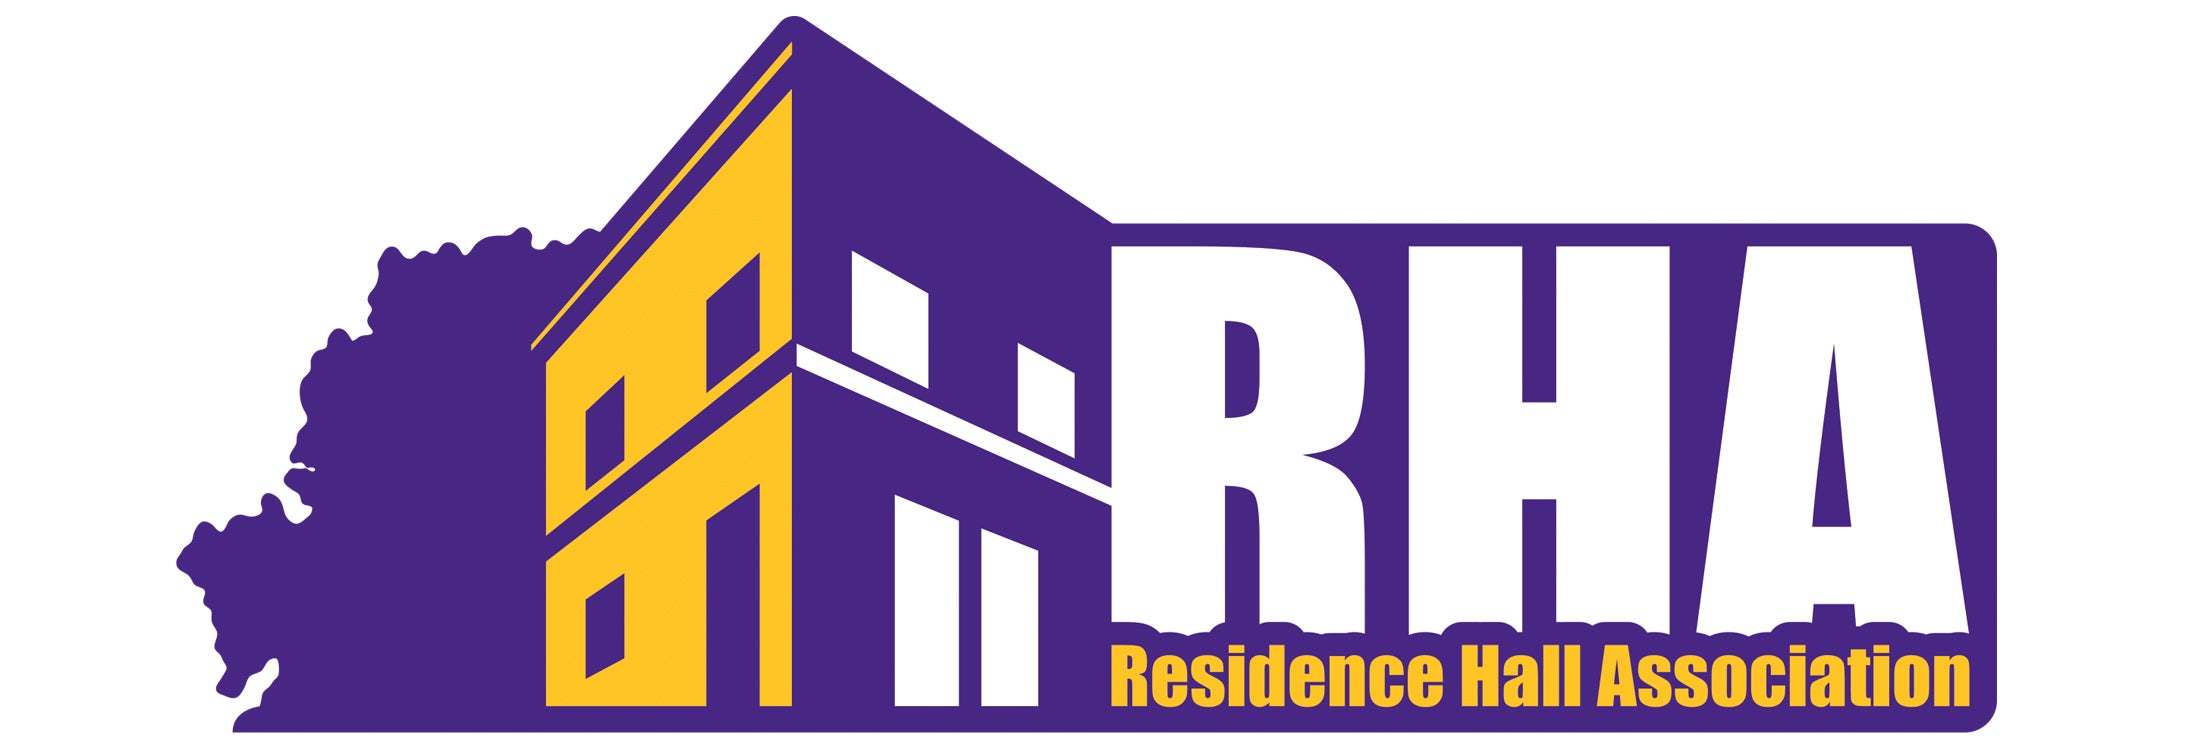 East Carolina University Residence Hall Association Logo